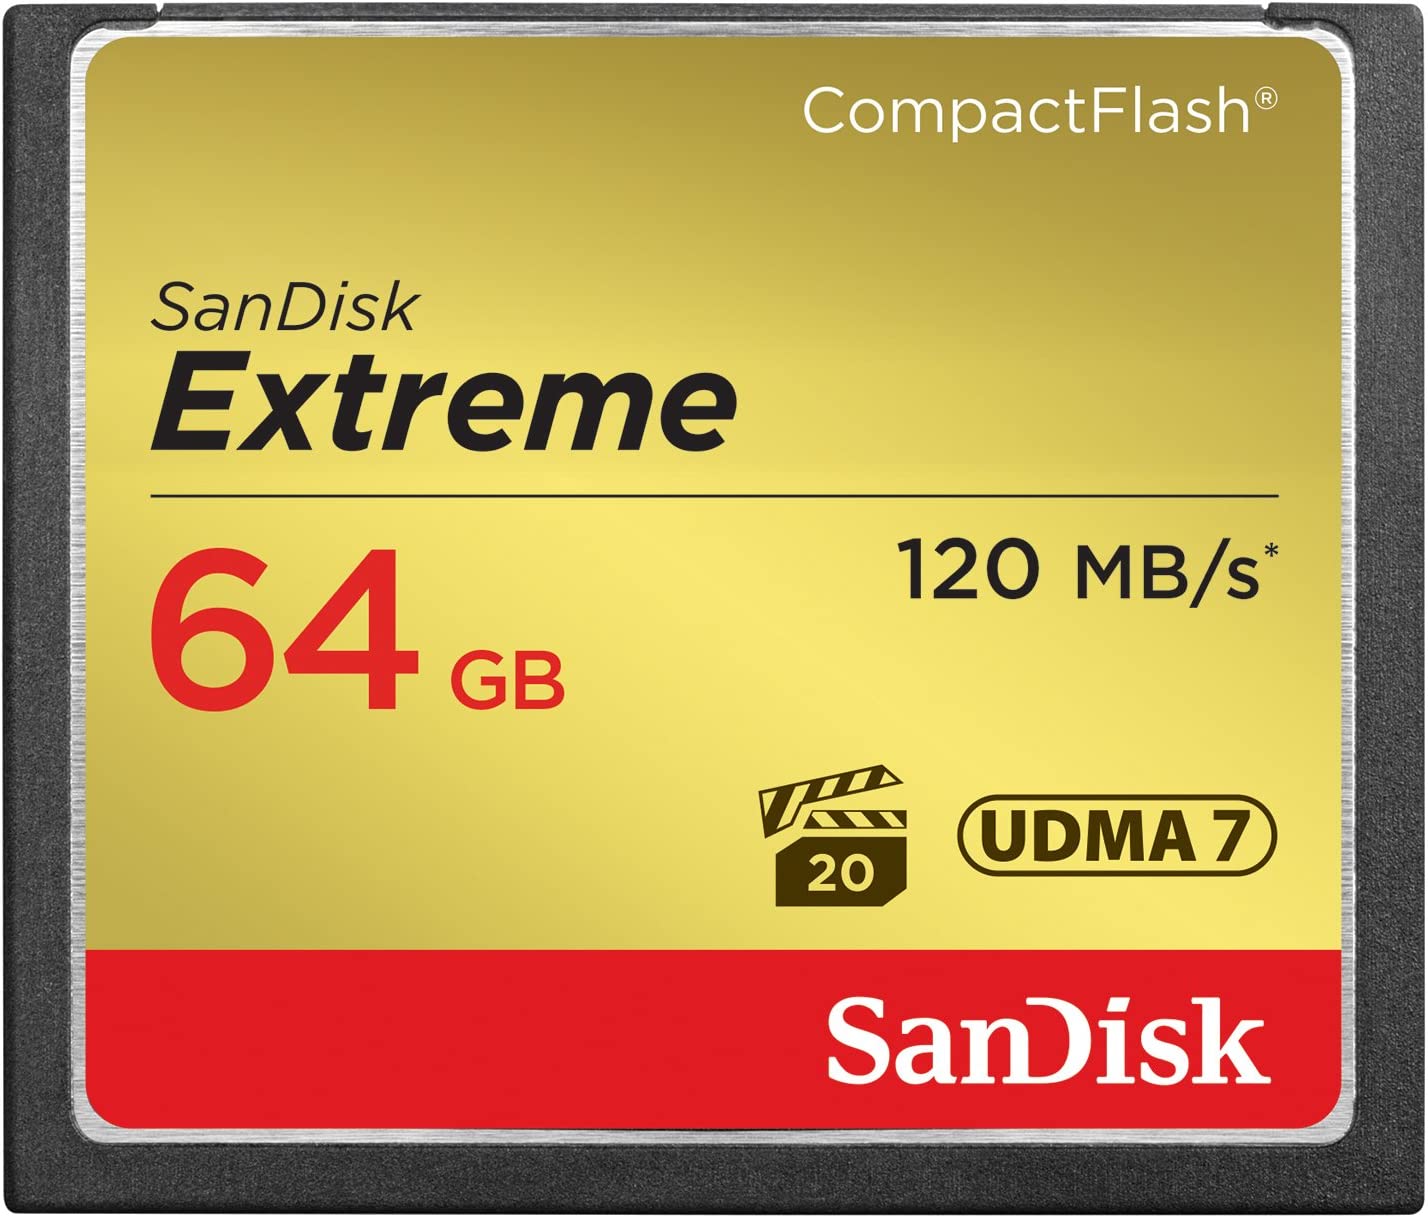 SanDisk 64GB Extreme CompactFlash 메모리 카드 UDMA 7 속도 최대 120MB/s - SDCFXSB-064G-G46